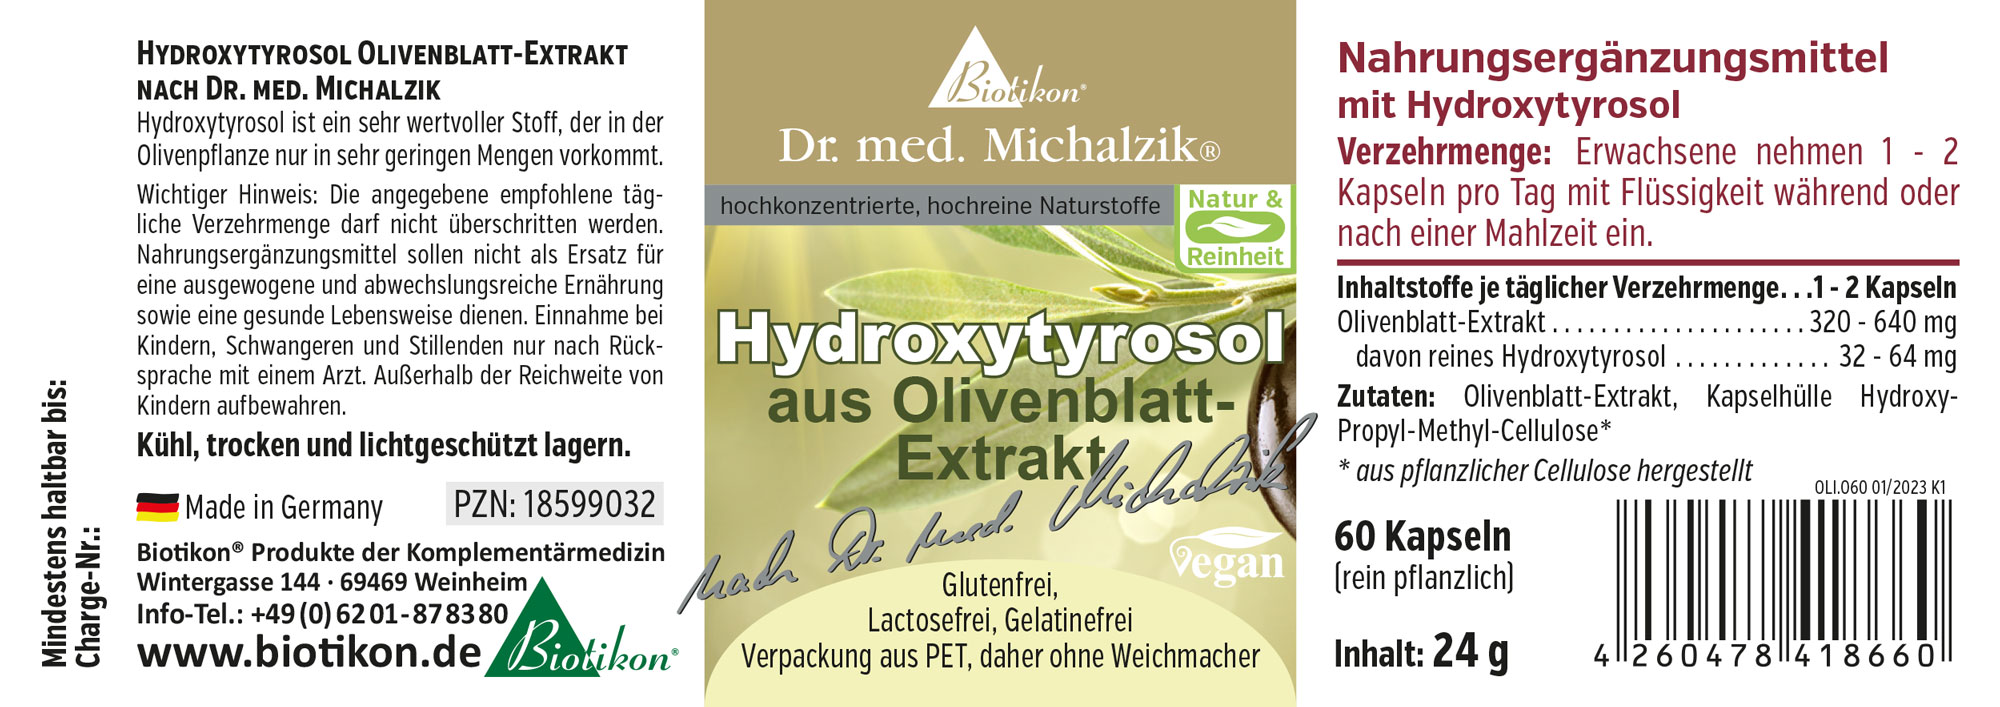 Hydroxytyrosol extrait de feuille d’olivier